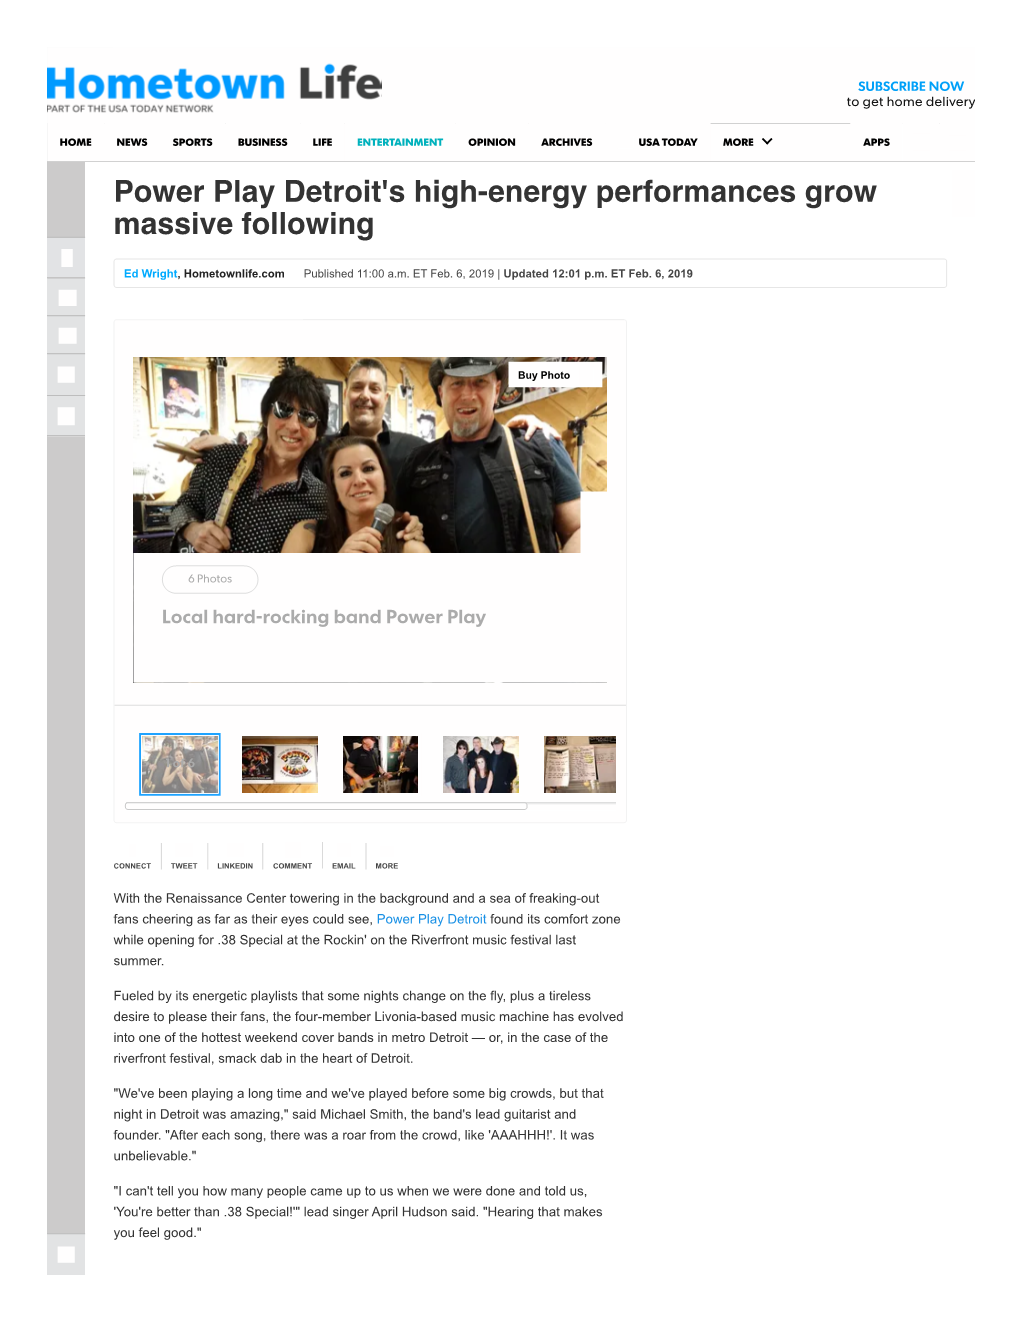 Power Play Band Rocks Metro Detroit